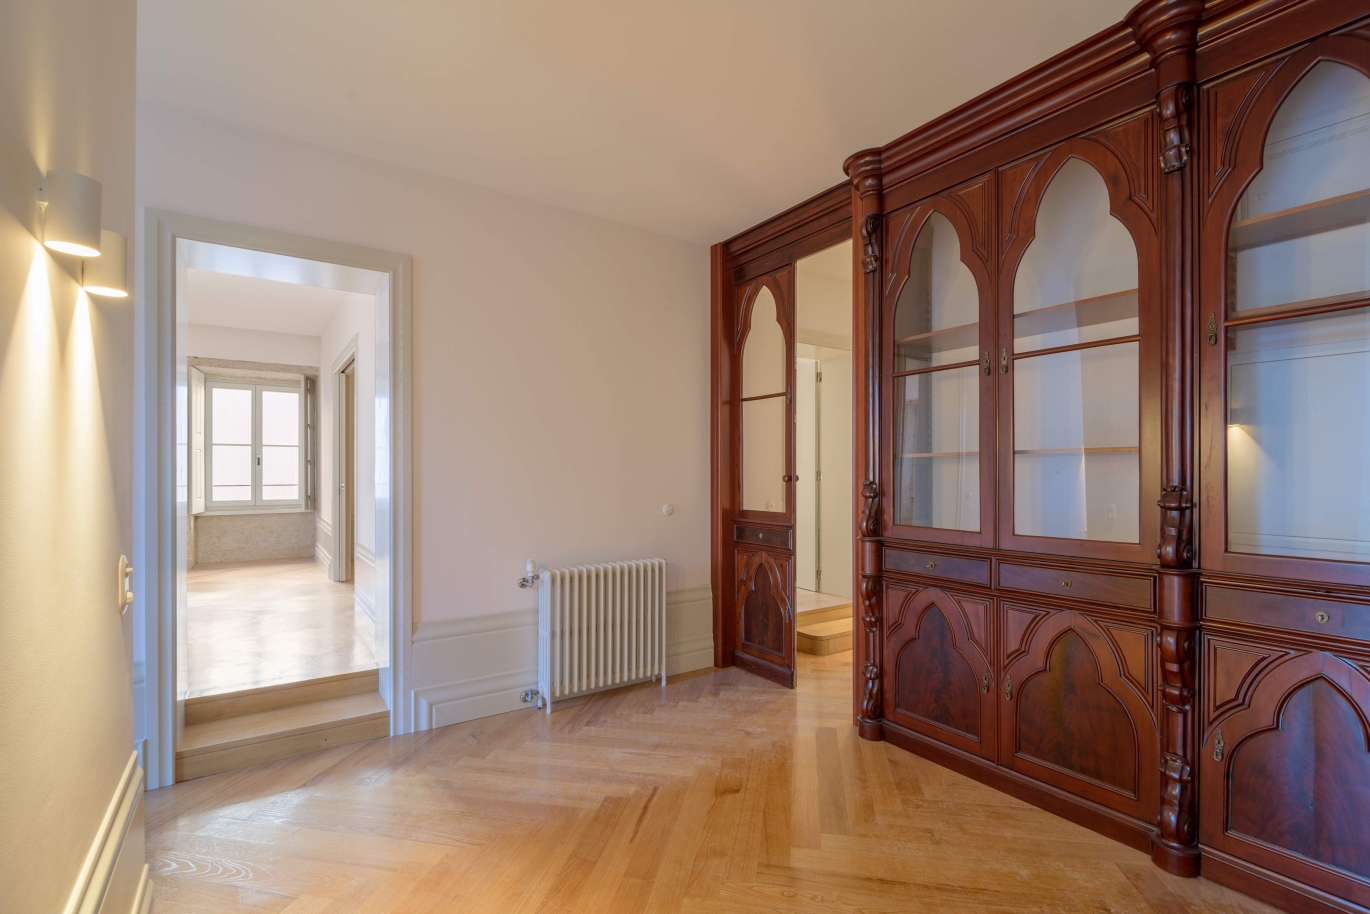 New apartment for sale in luxury development, Cedofeita,Porto,Portugal_161693